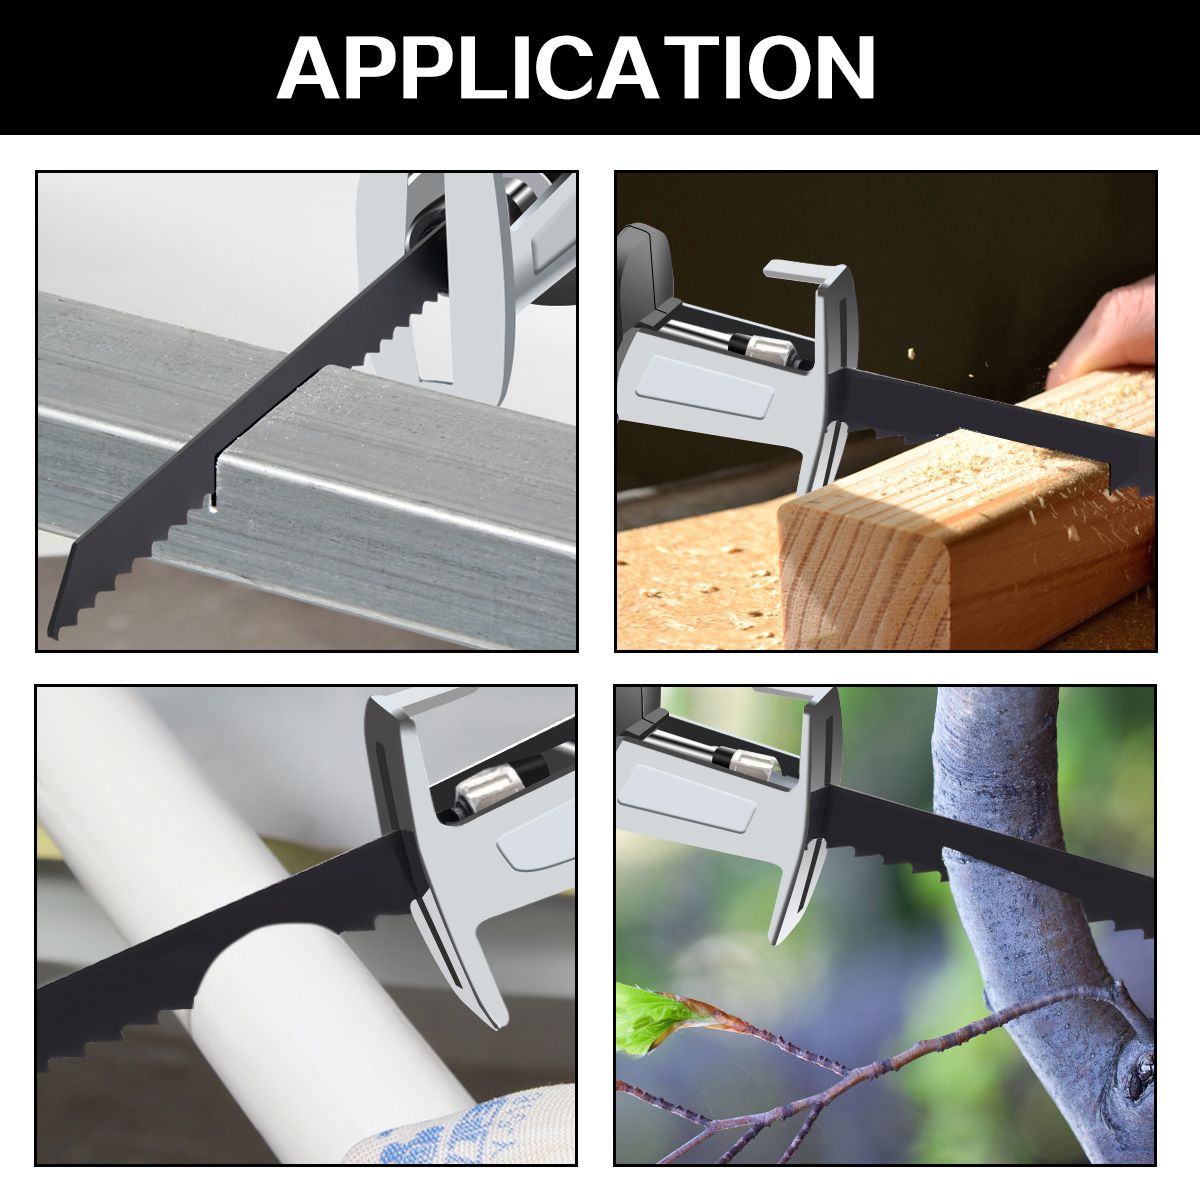 21V-Cordless-Reciprocating-Saw-Chainsaw-W-4-Saw-Blades-Metal-Cutting-Woodworking-1699271